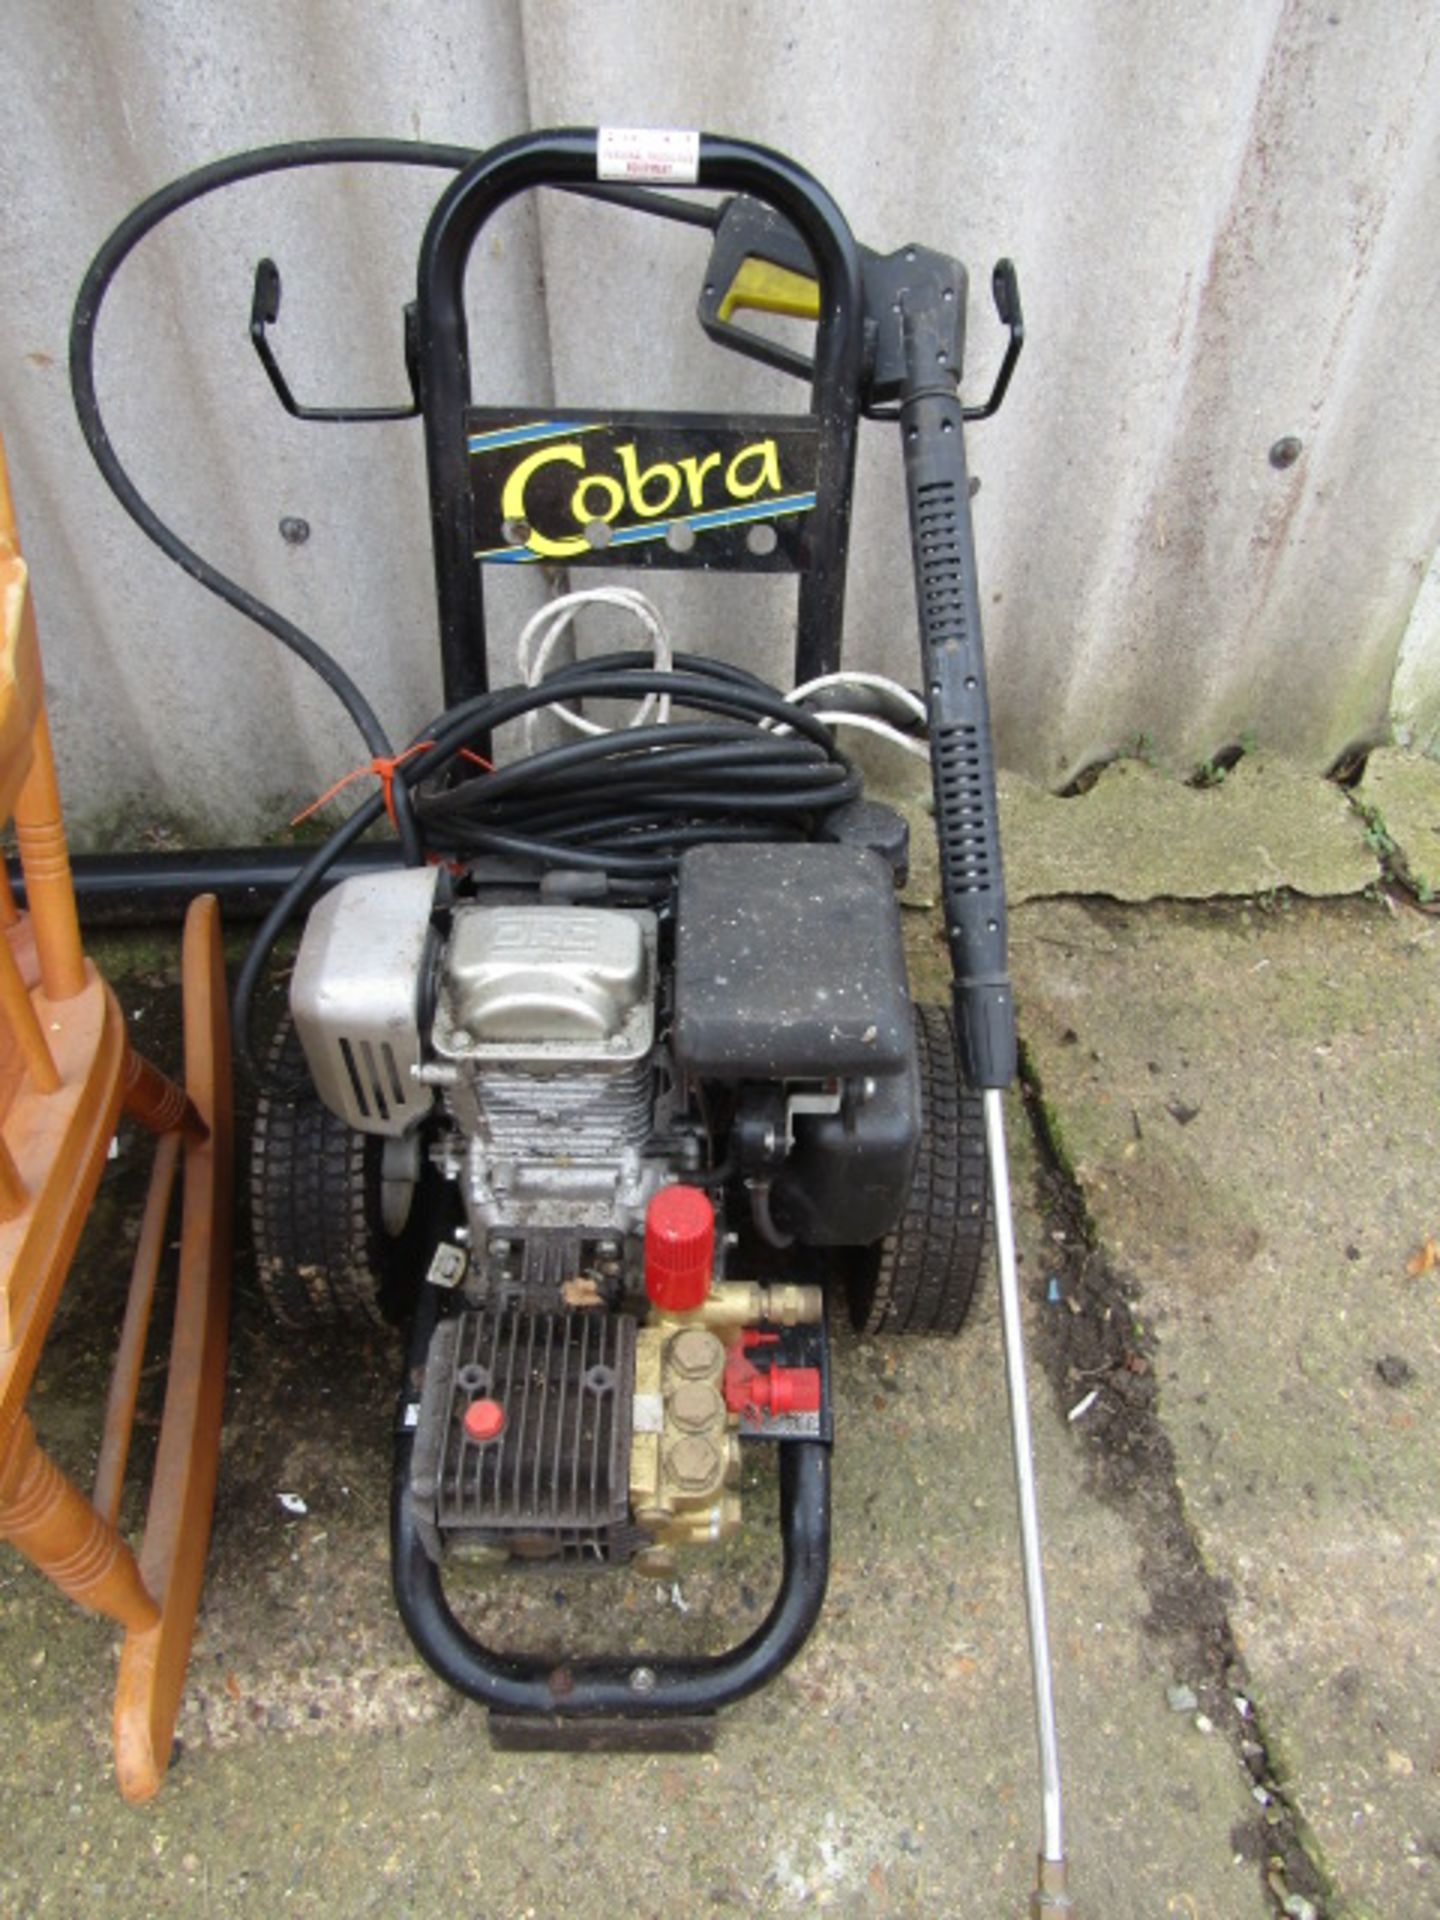 Cobra pressure washer